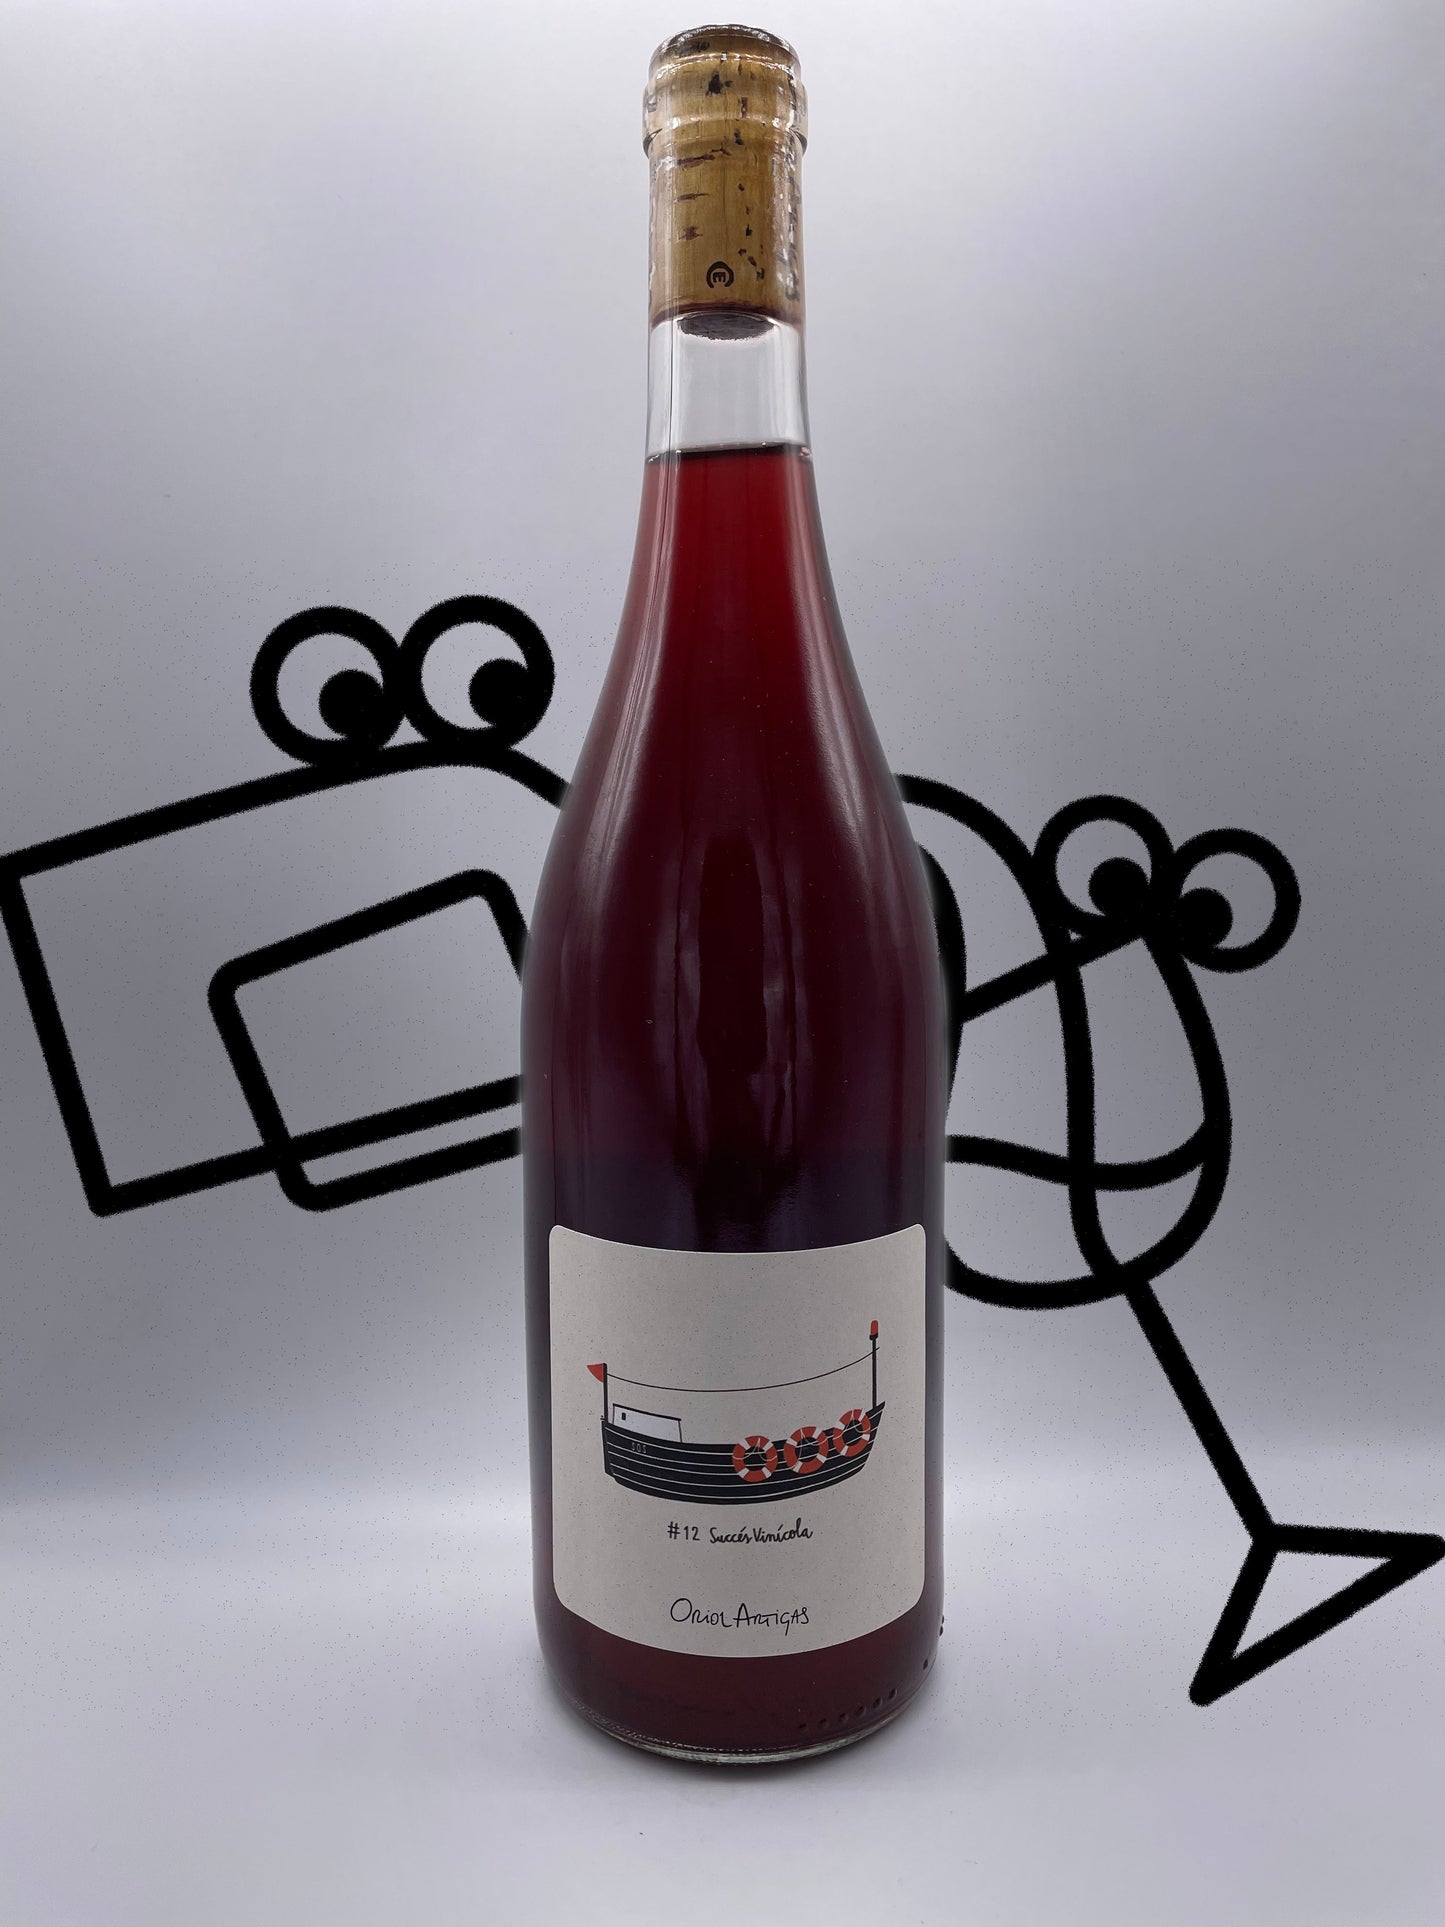 Oriol Artigas SOS#12 Succes Vinicola Negre 2020 Catalonia, Spain Williston Park Wines